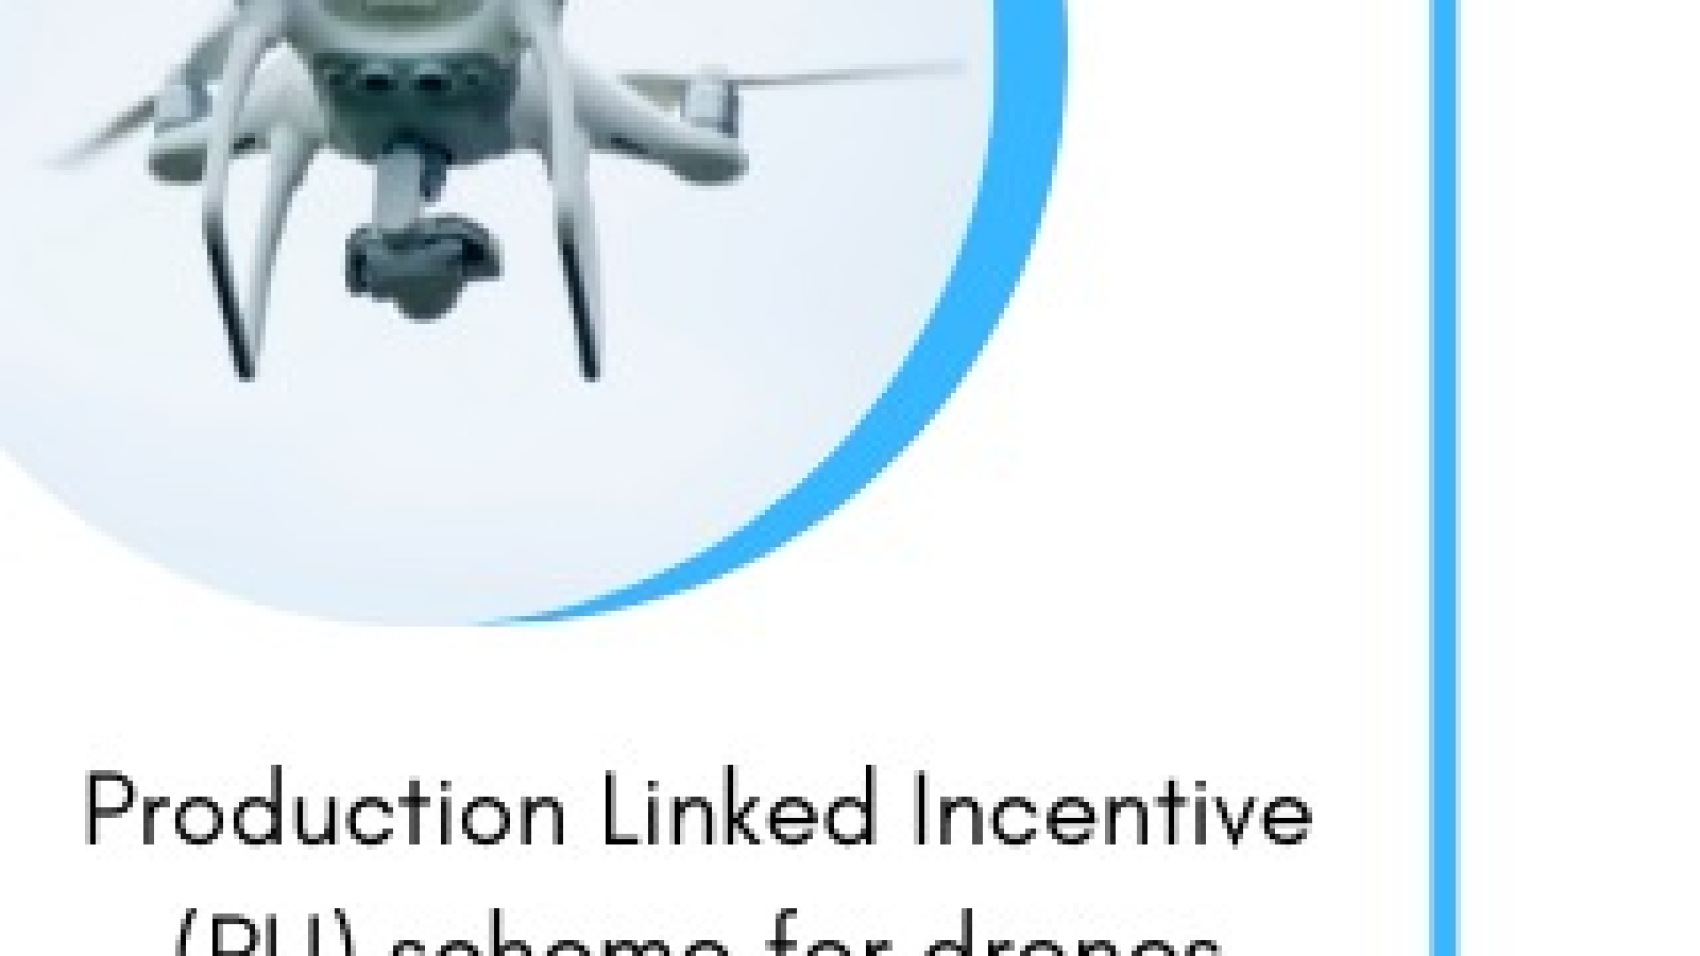 PLI scheme for Drone